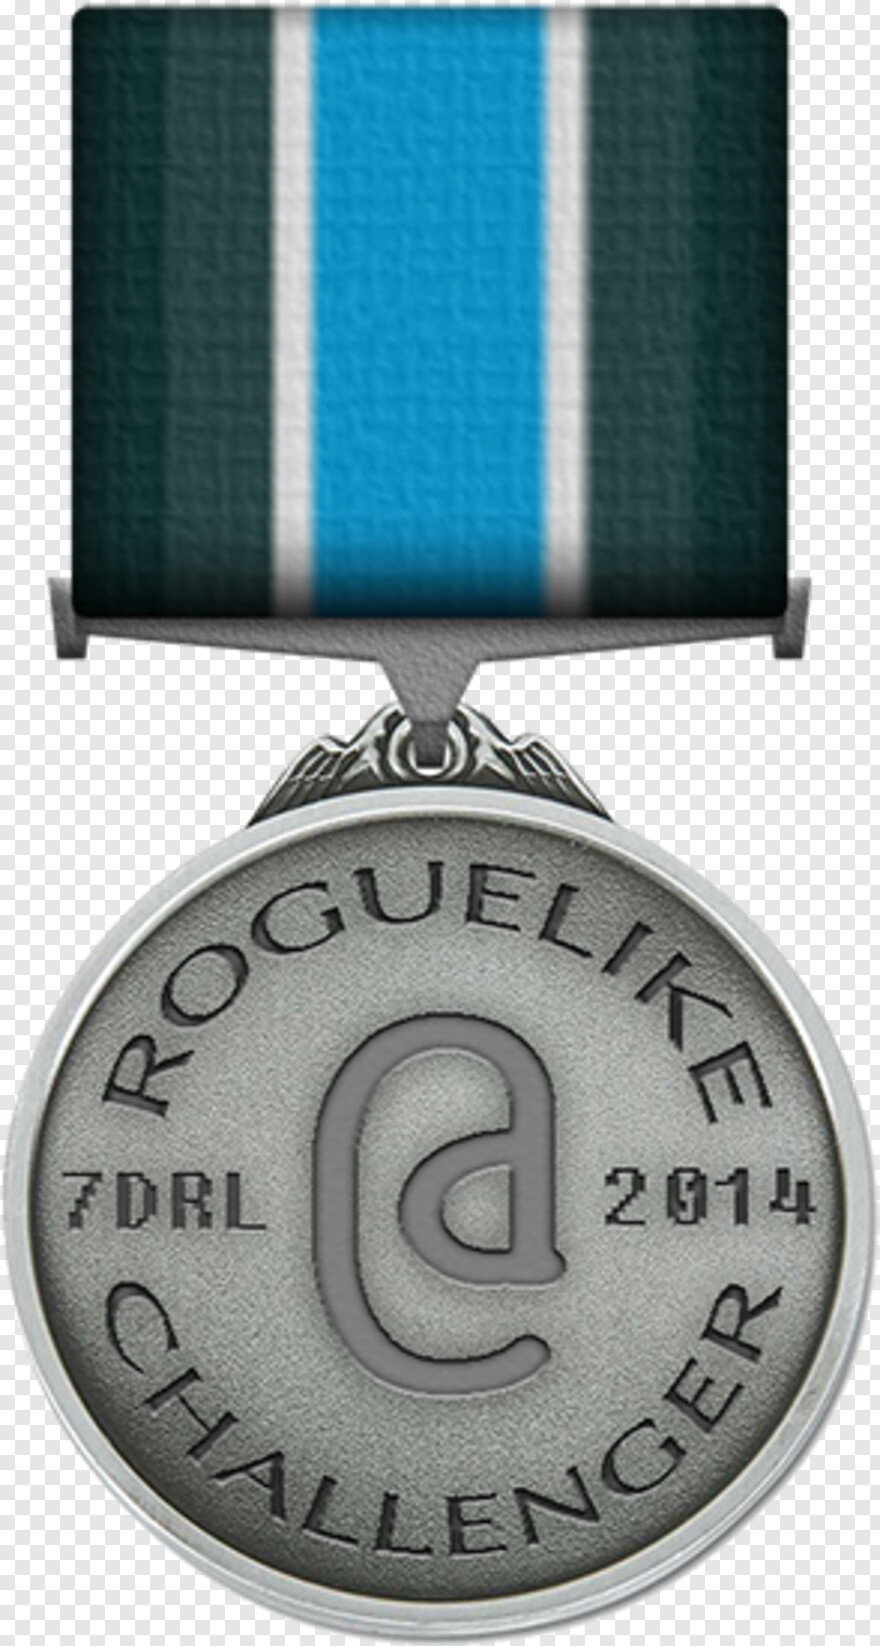  Gold Medal, Medal, Silver Ribbon, Silver Border, Silver Frame, Silver Line